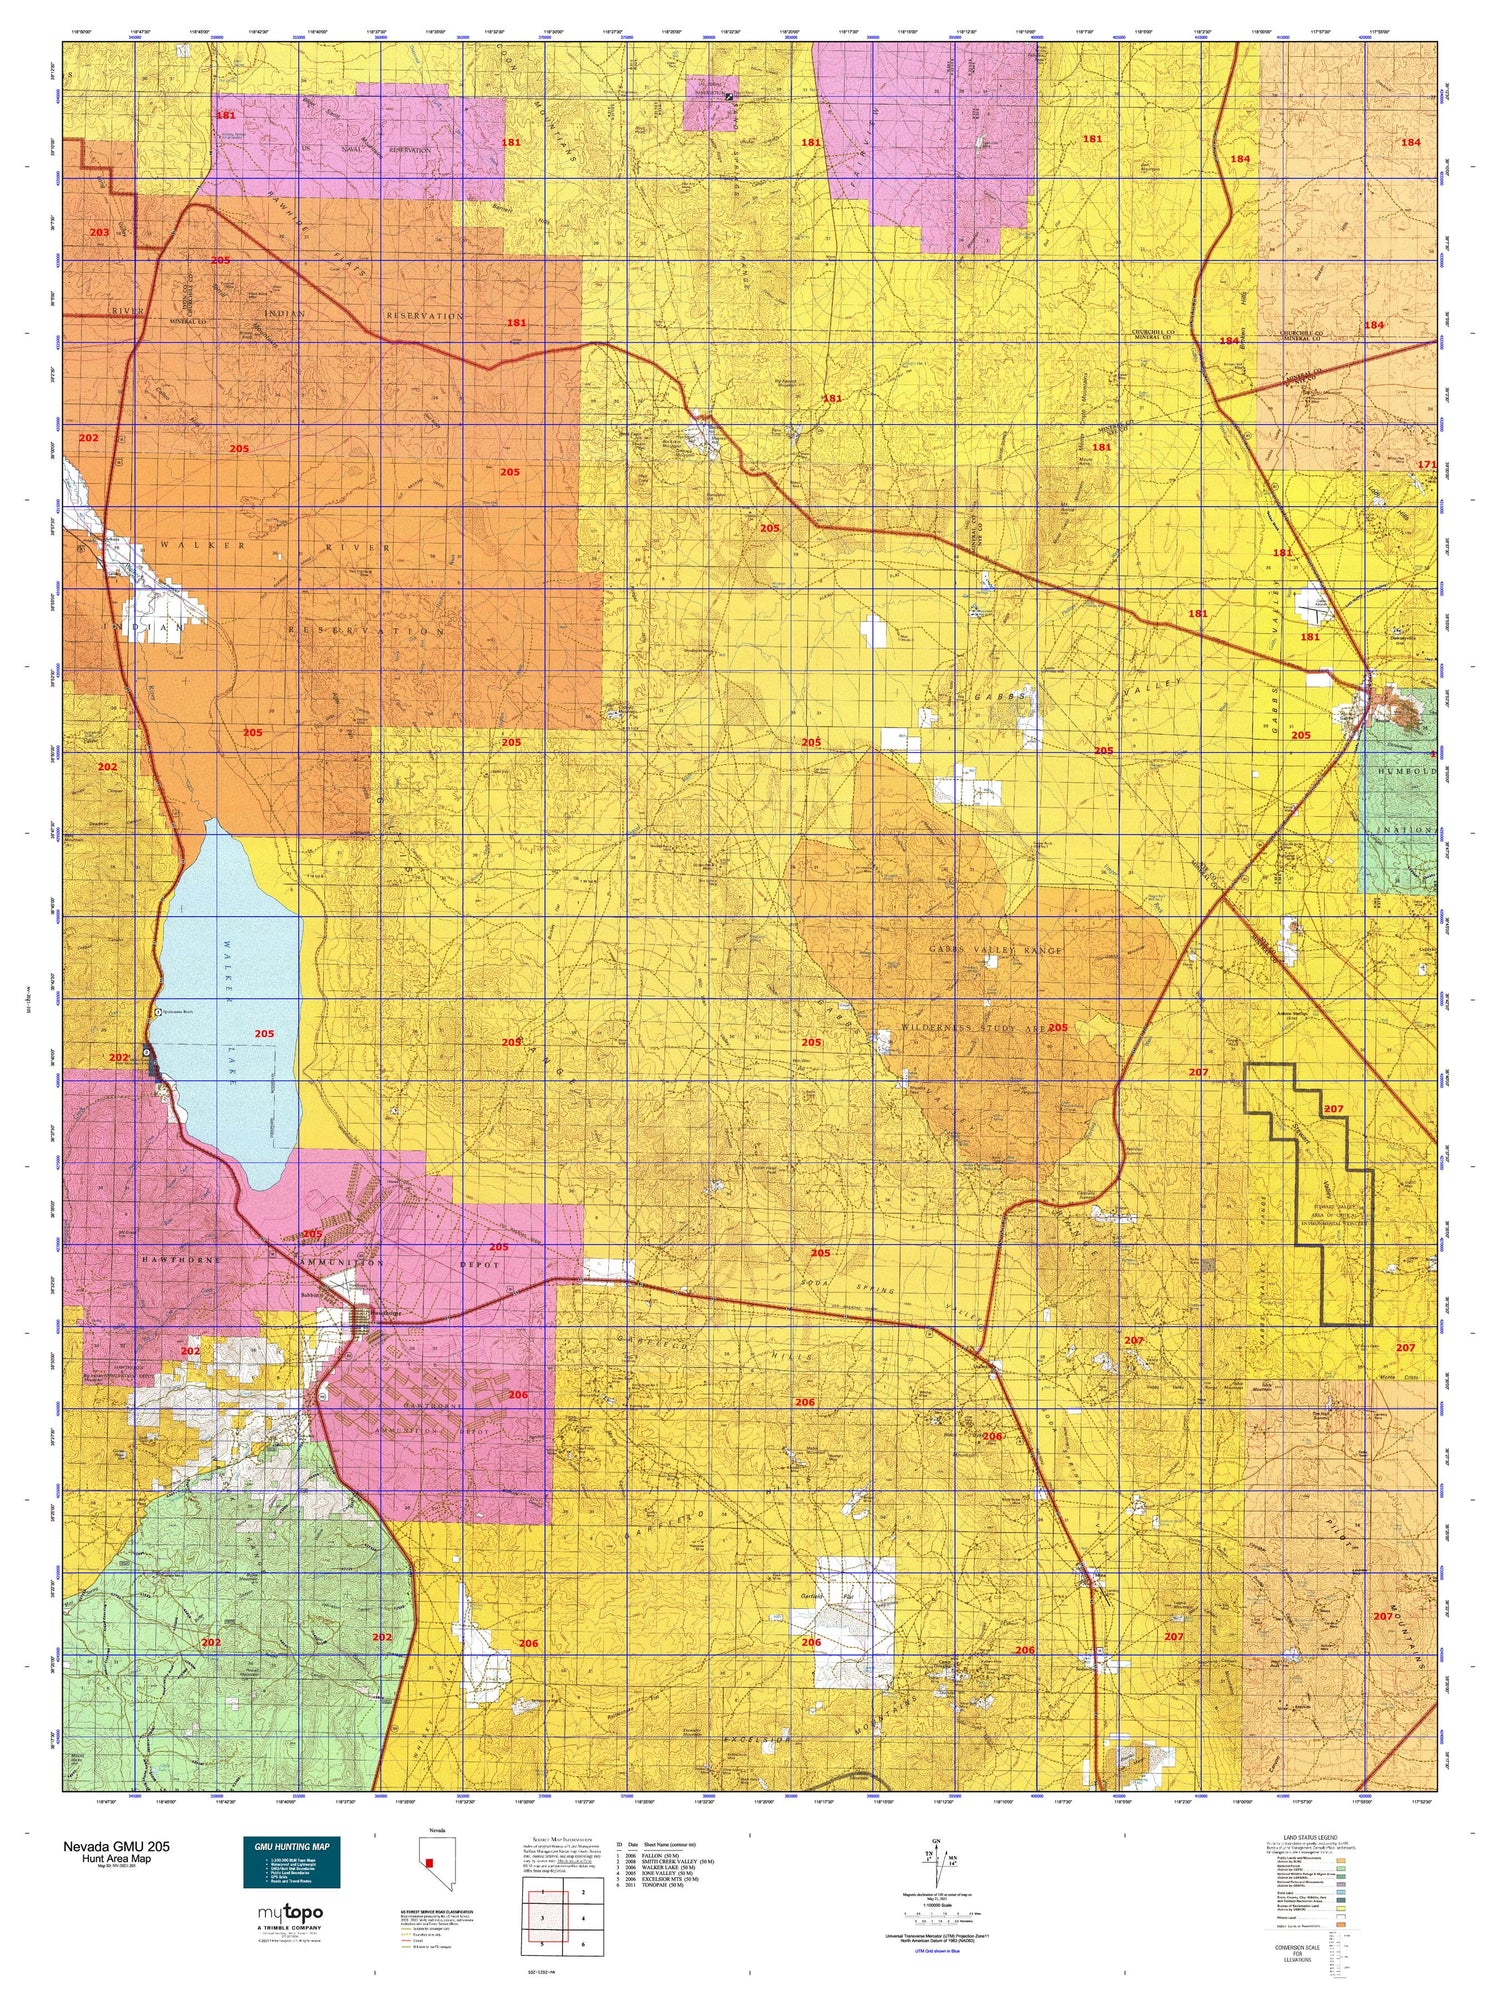 Nevada GMU 205 Map Image